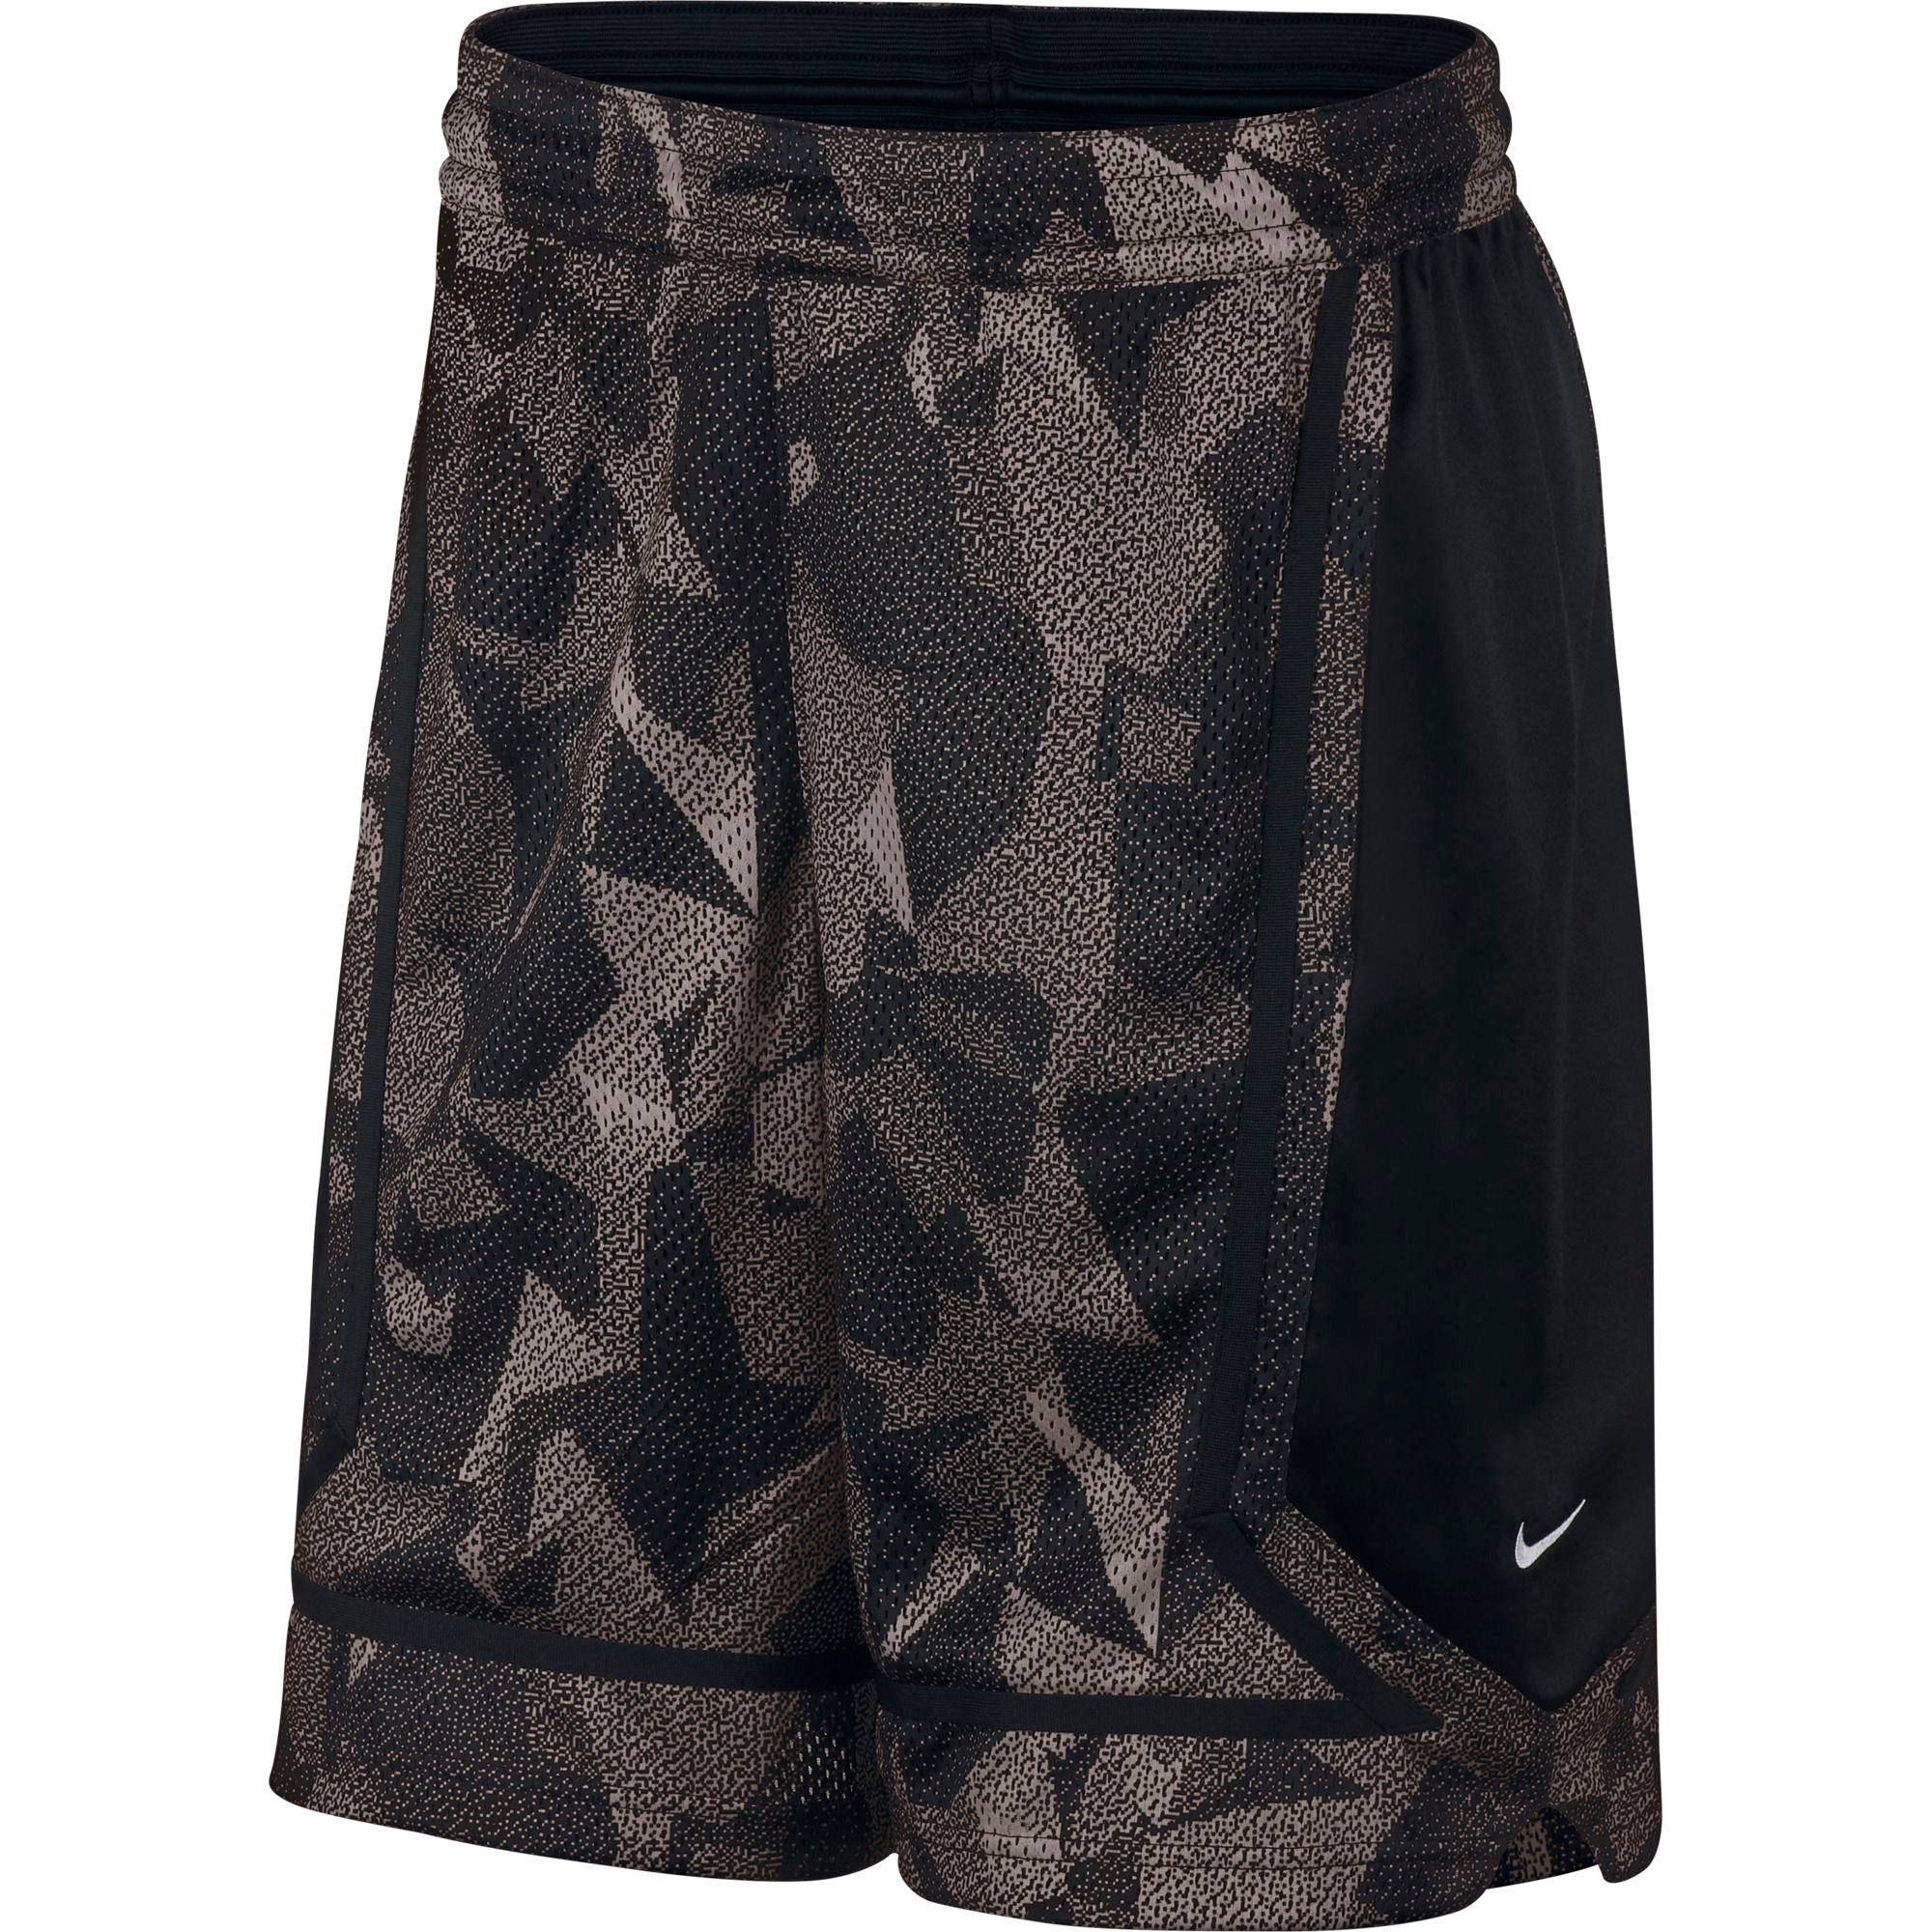 kyrie basketball shorts